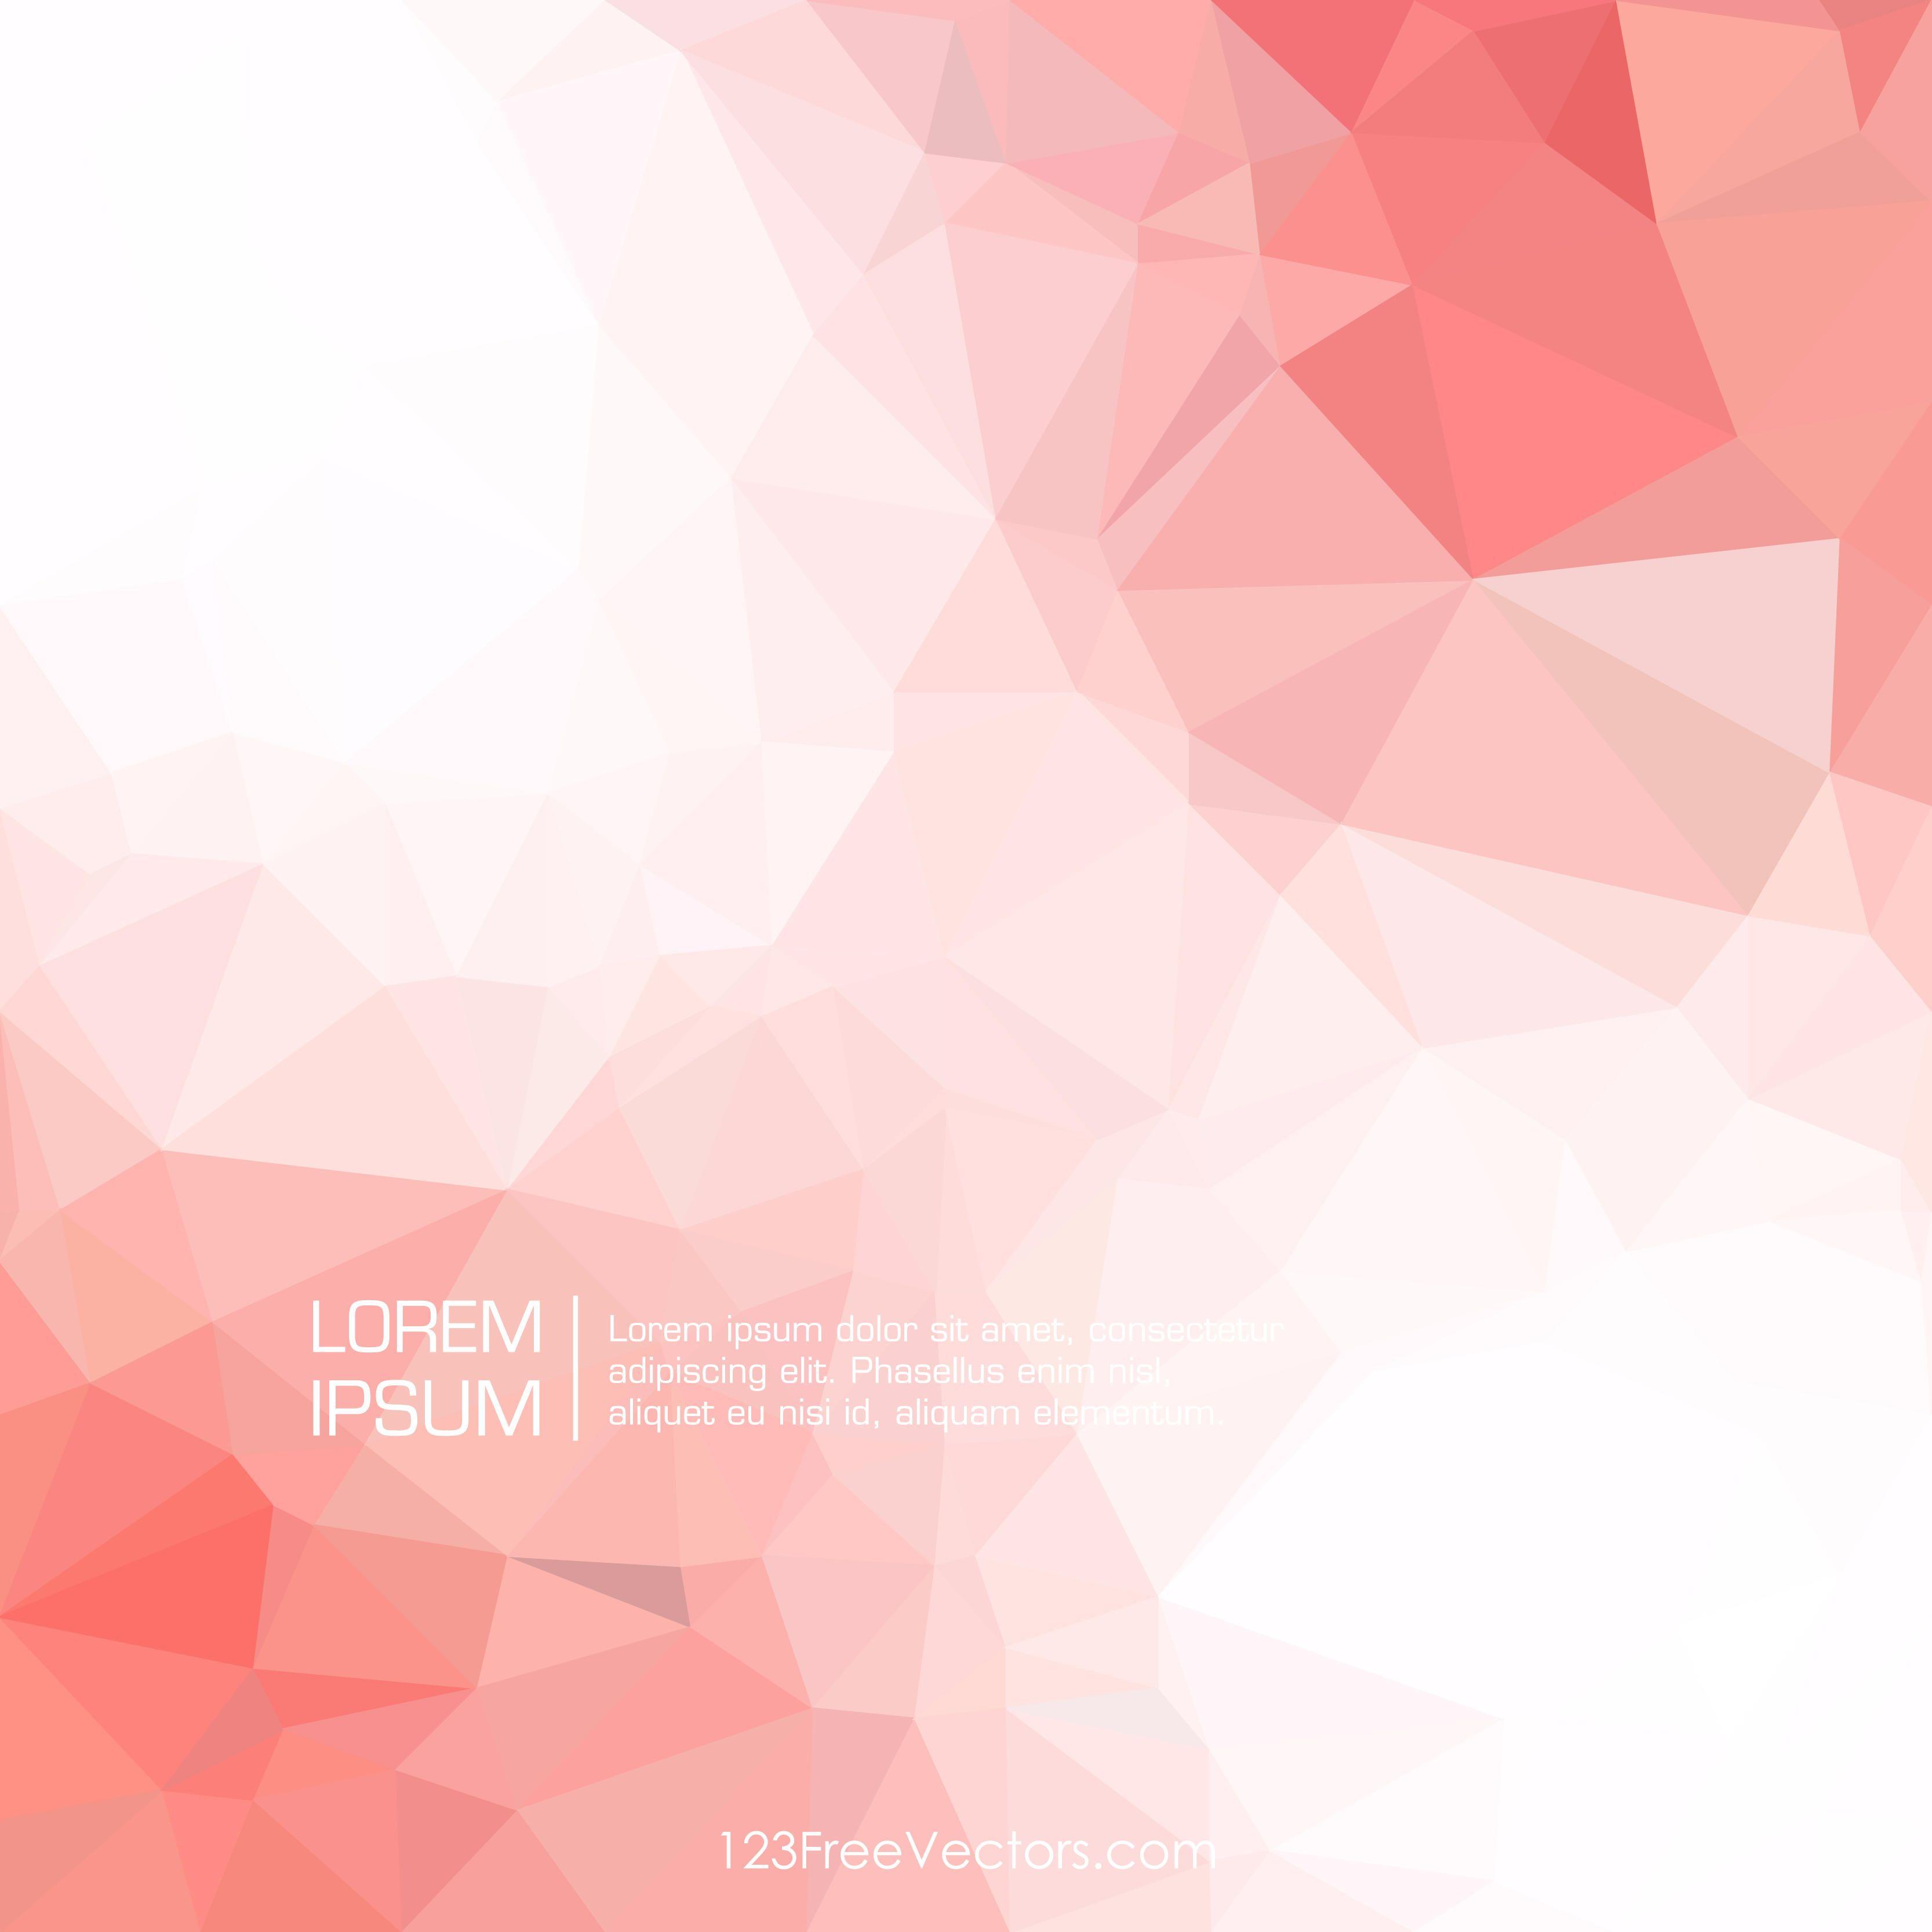 Polygonal Triangular Light Pink Background DesignFreevectors